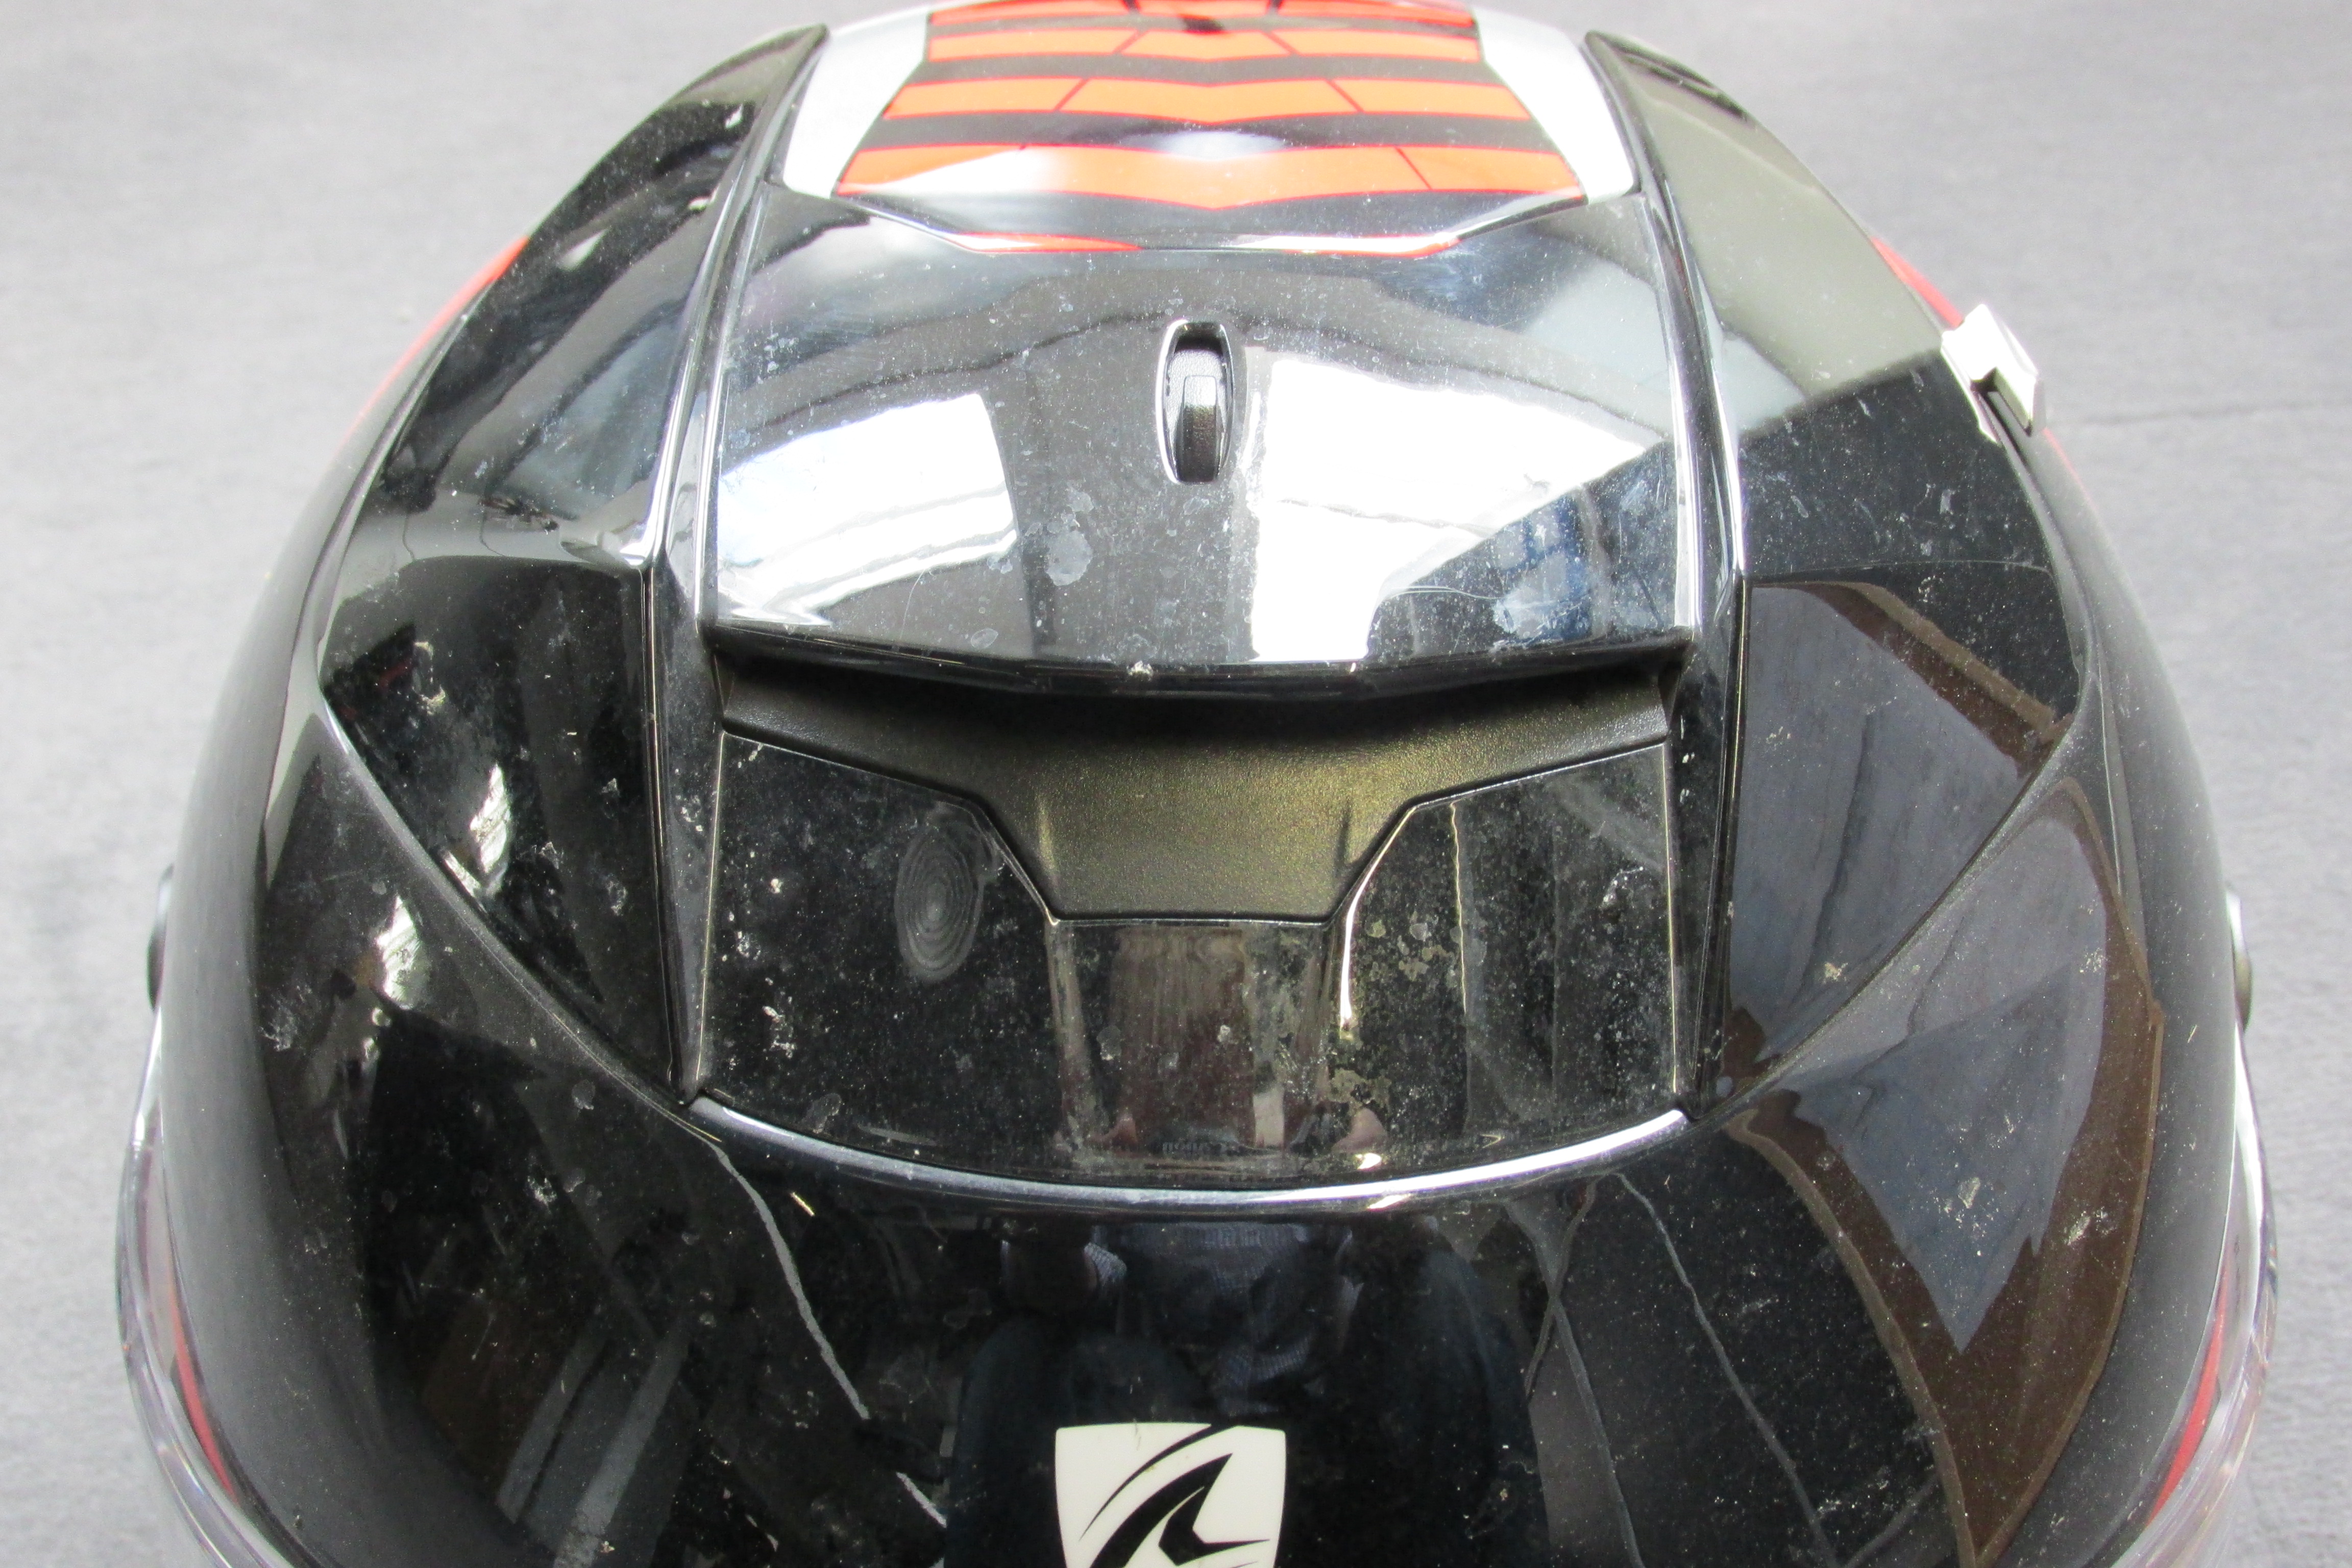 Used review: Shark Speed-R Texas helmet